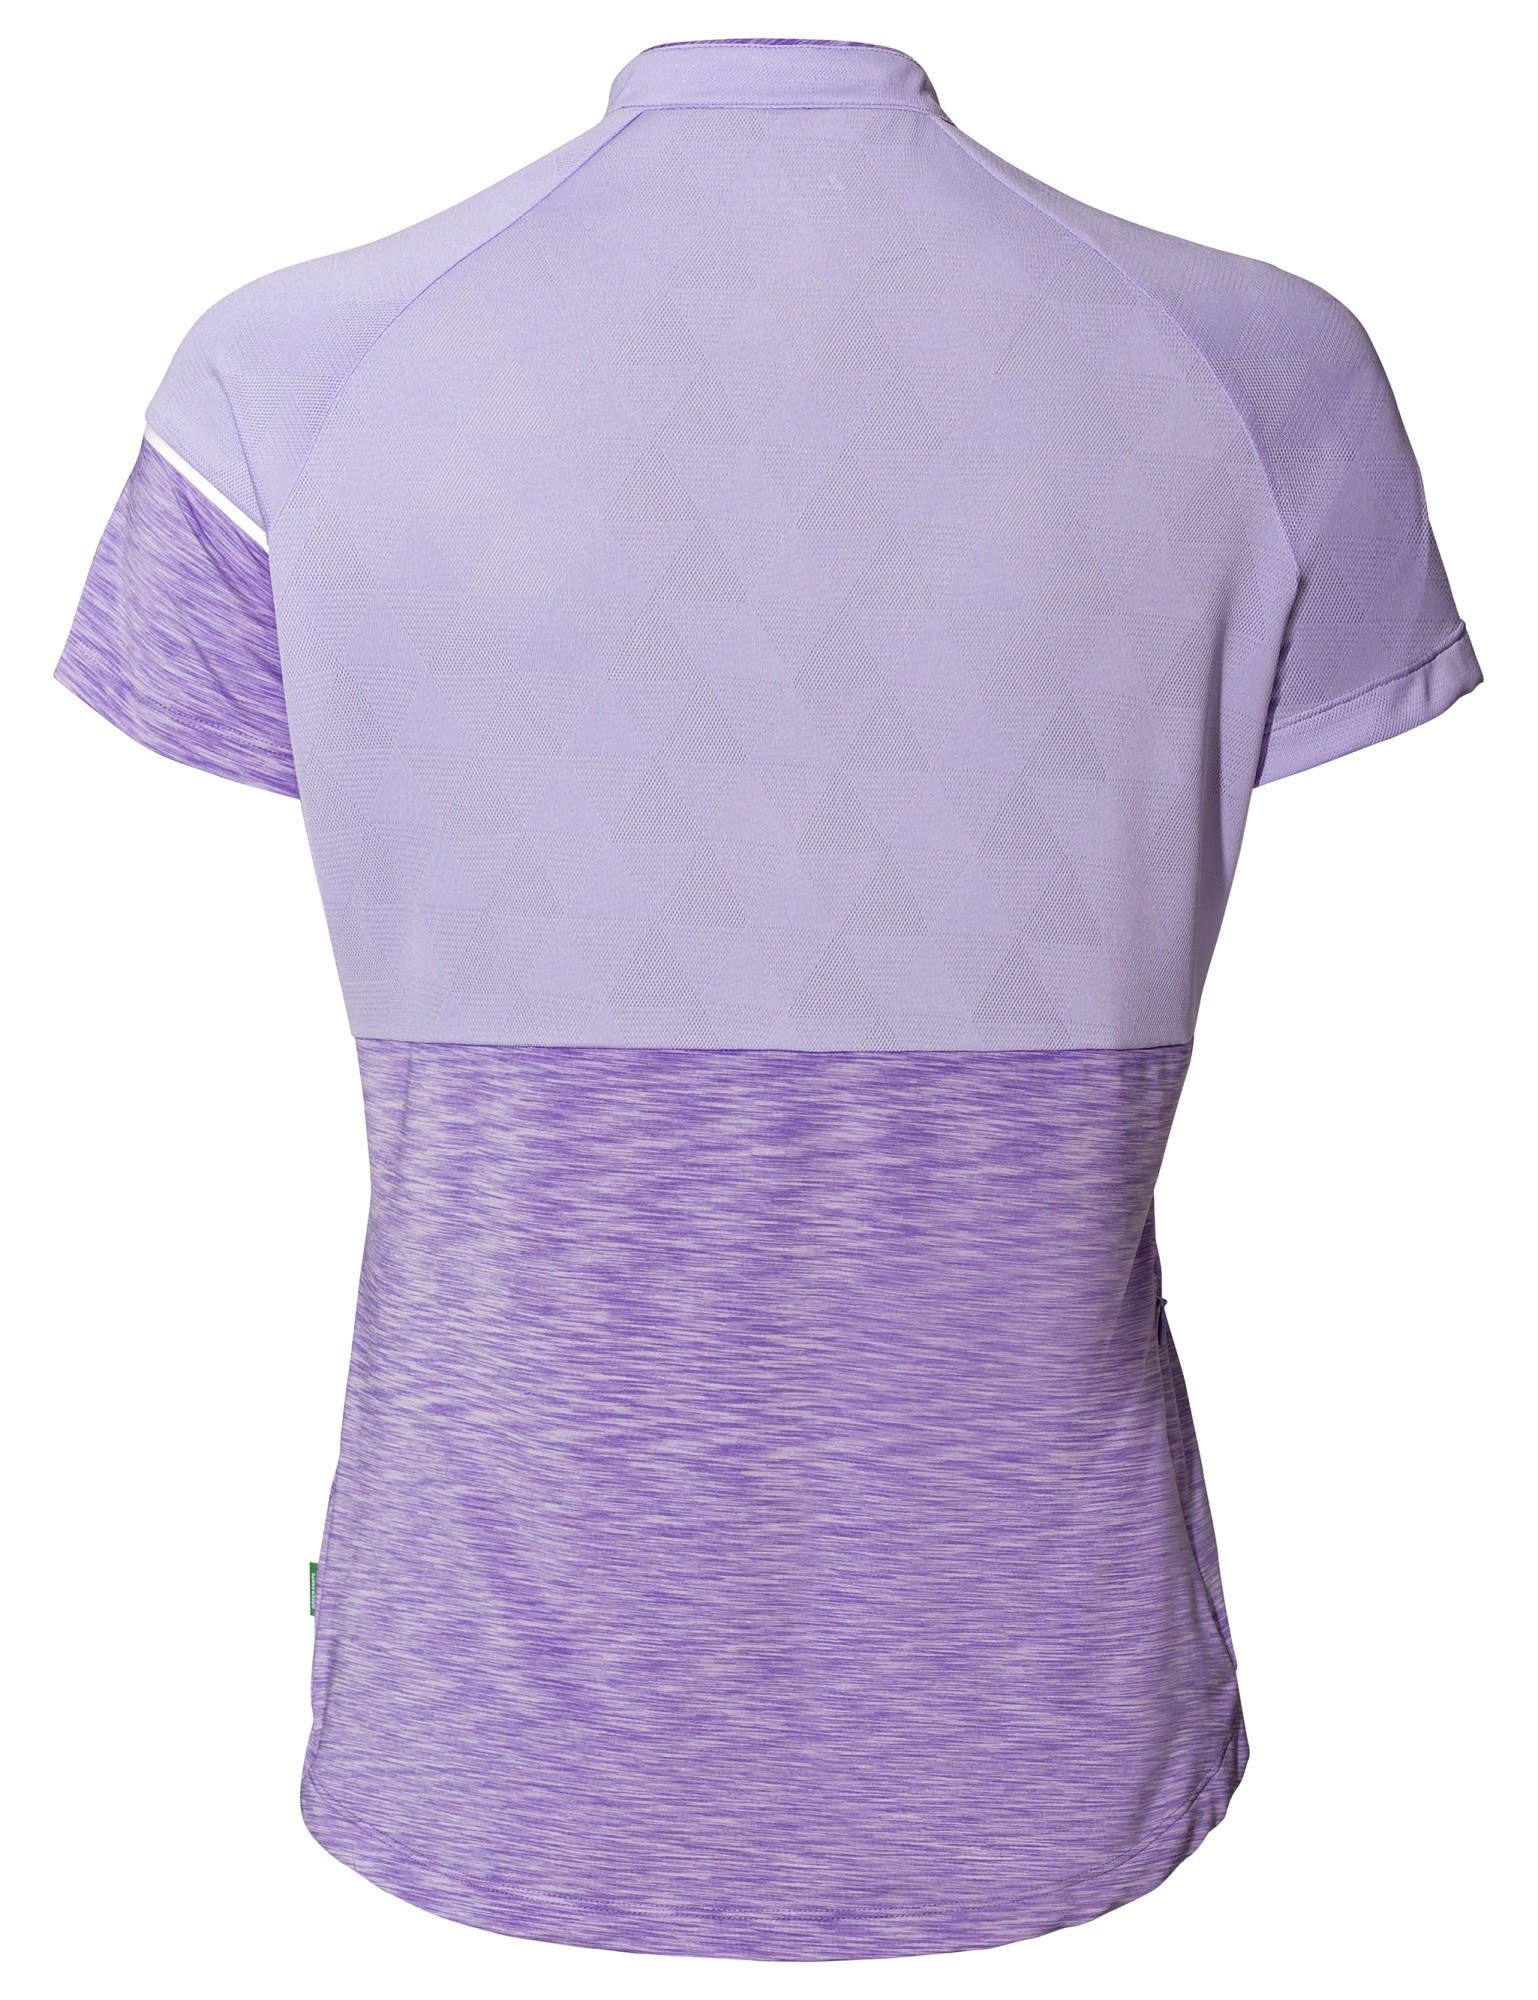 Altissimo VAUDE T-shirt Pastel Lilac Womens T-Shirt Vaude Kurzarm-Shirt Damen